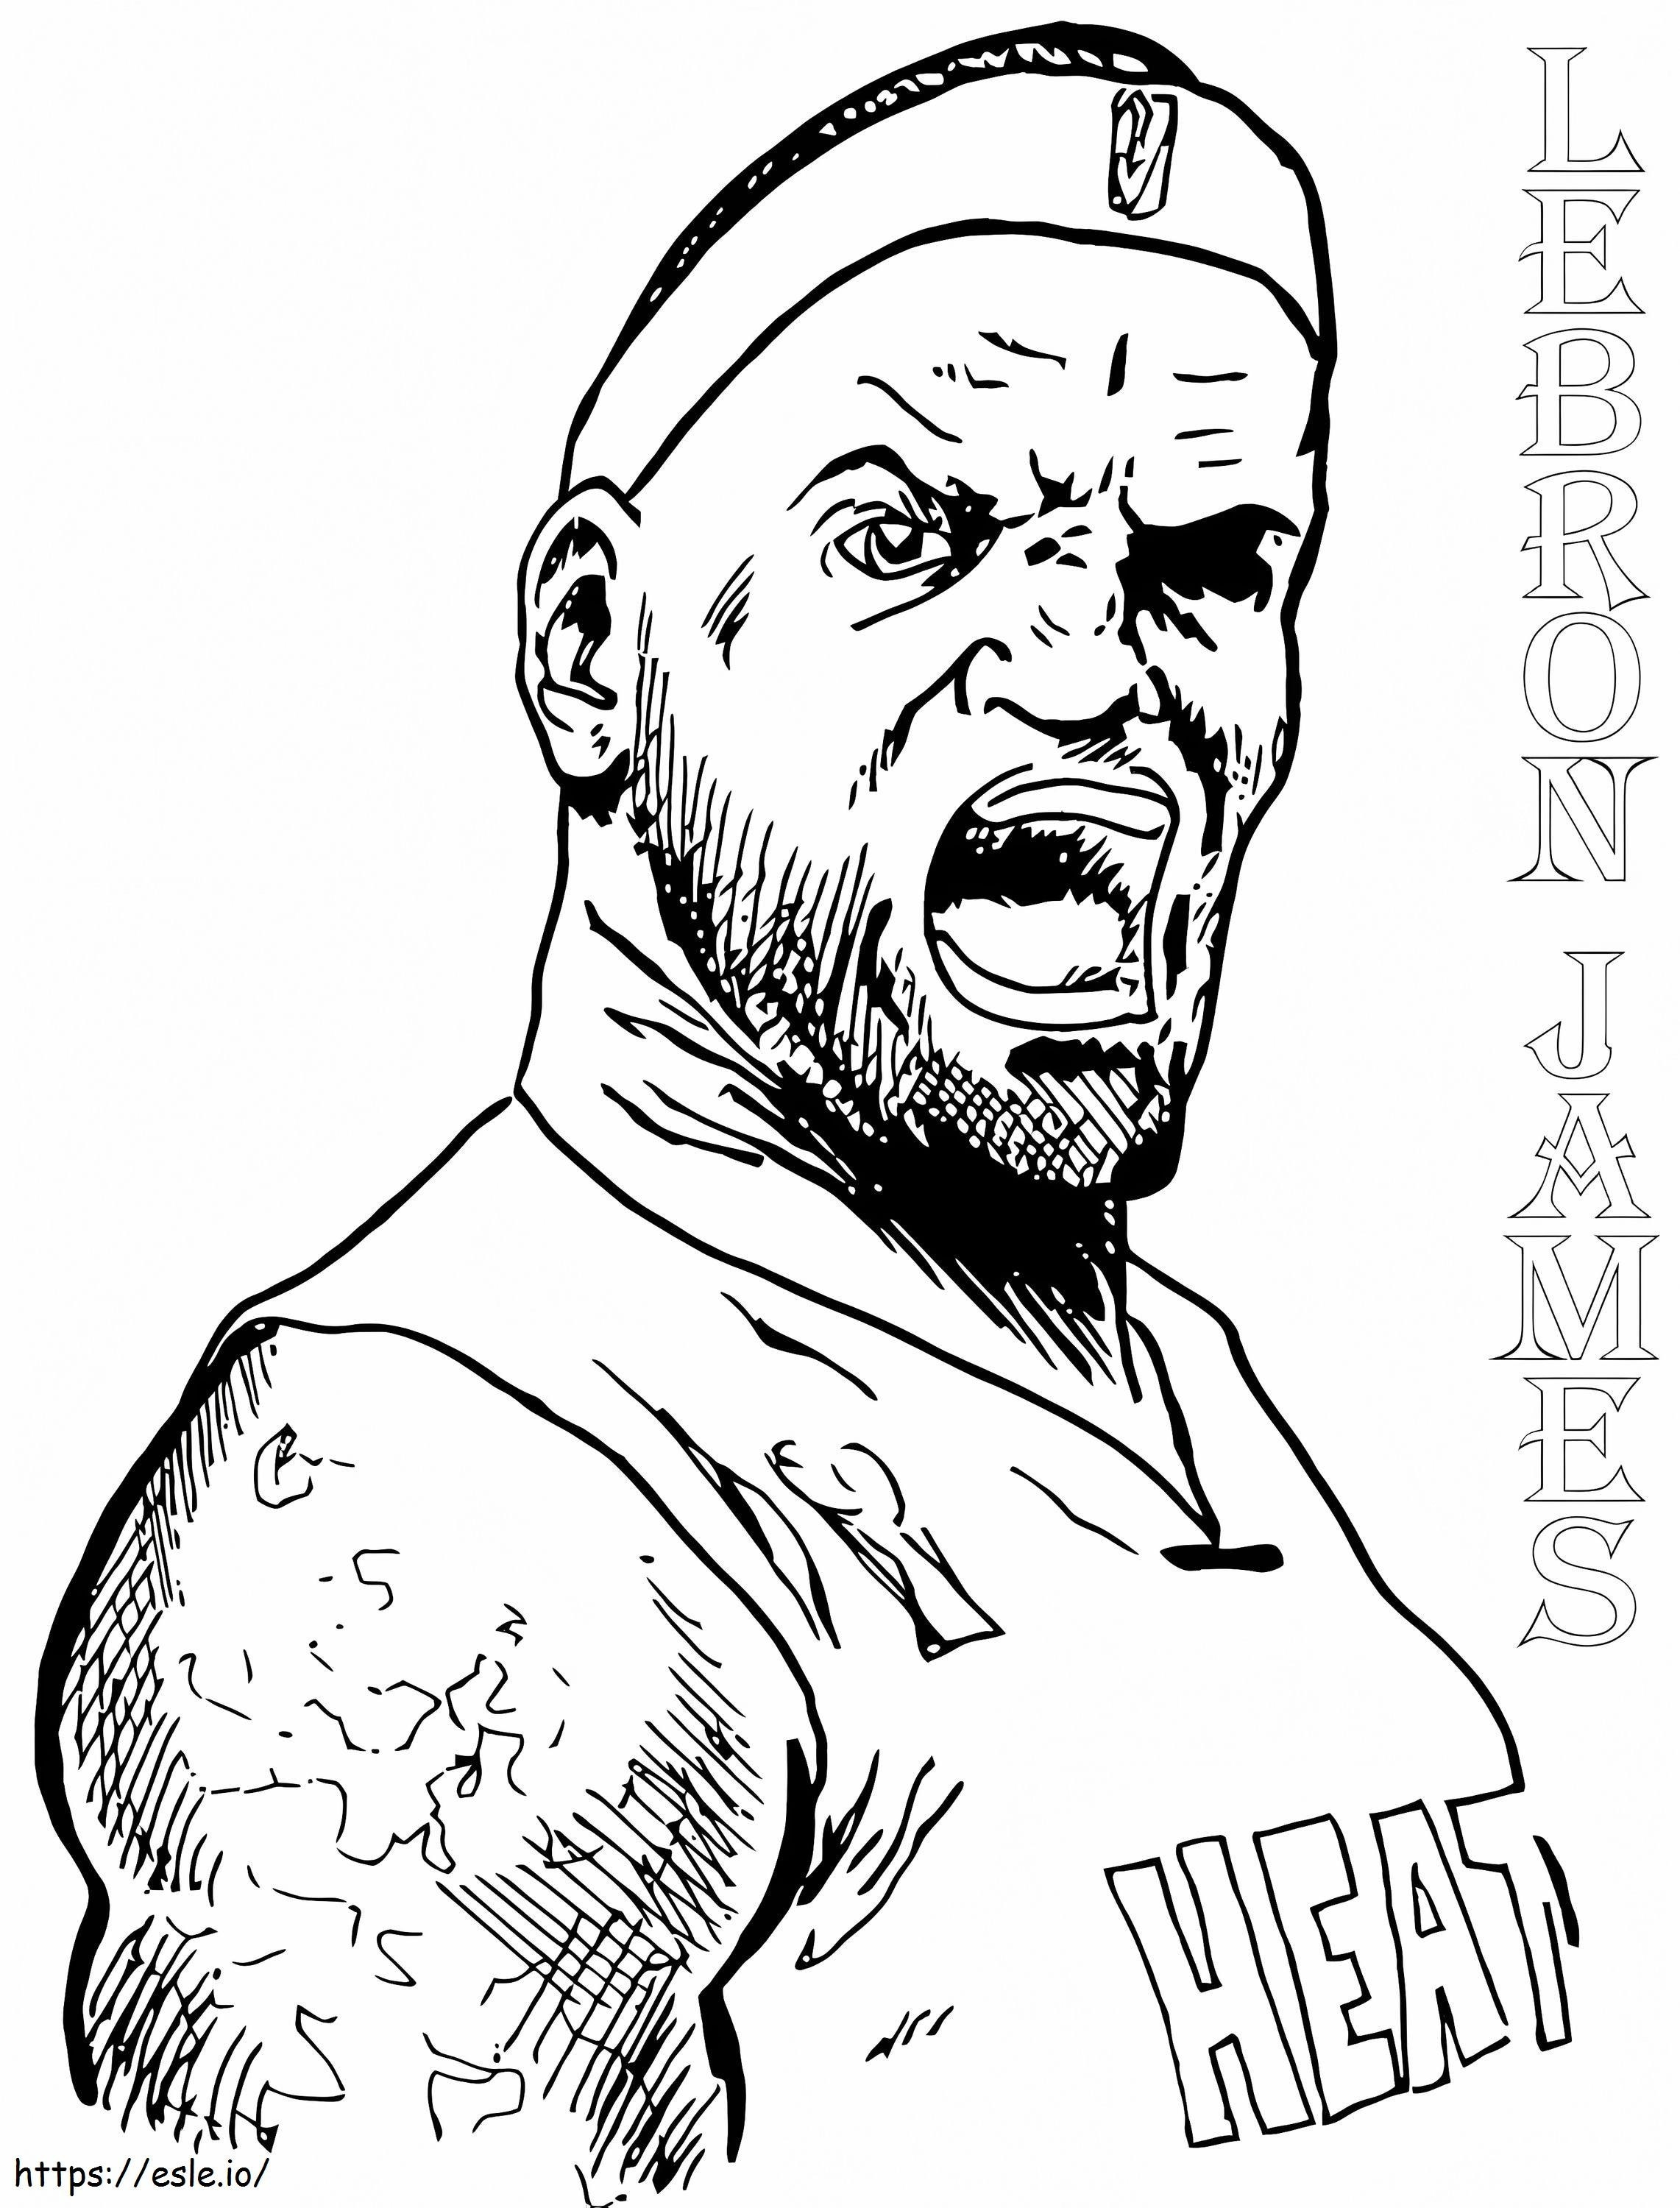 Angry Lebron James coloring page